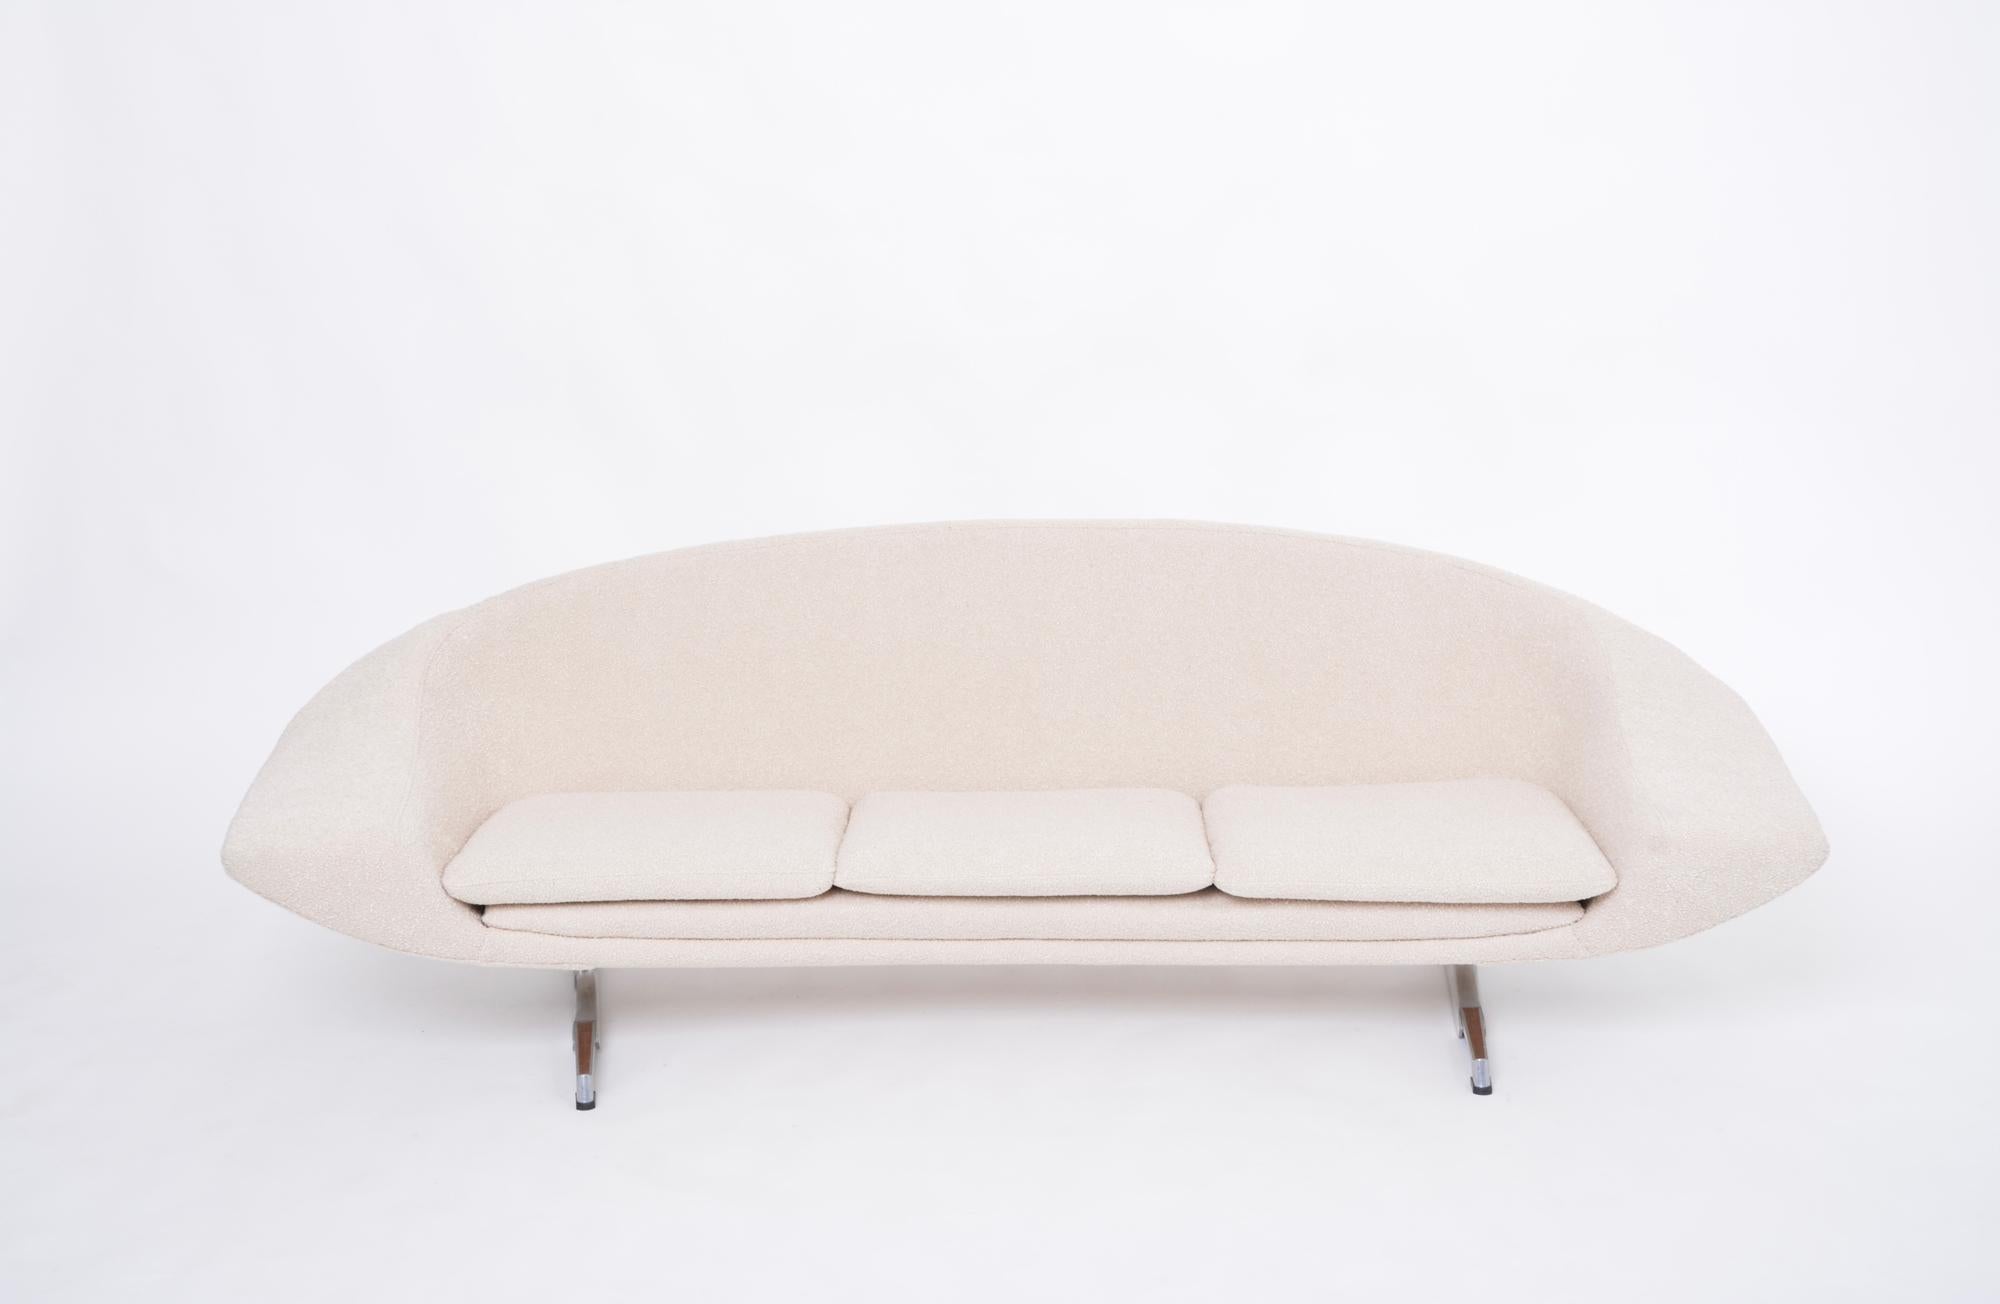 Beige reupholstered Mid-Century Modern sofa model Saturn by Hans-Erik Johansson
Very rare 